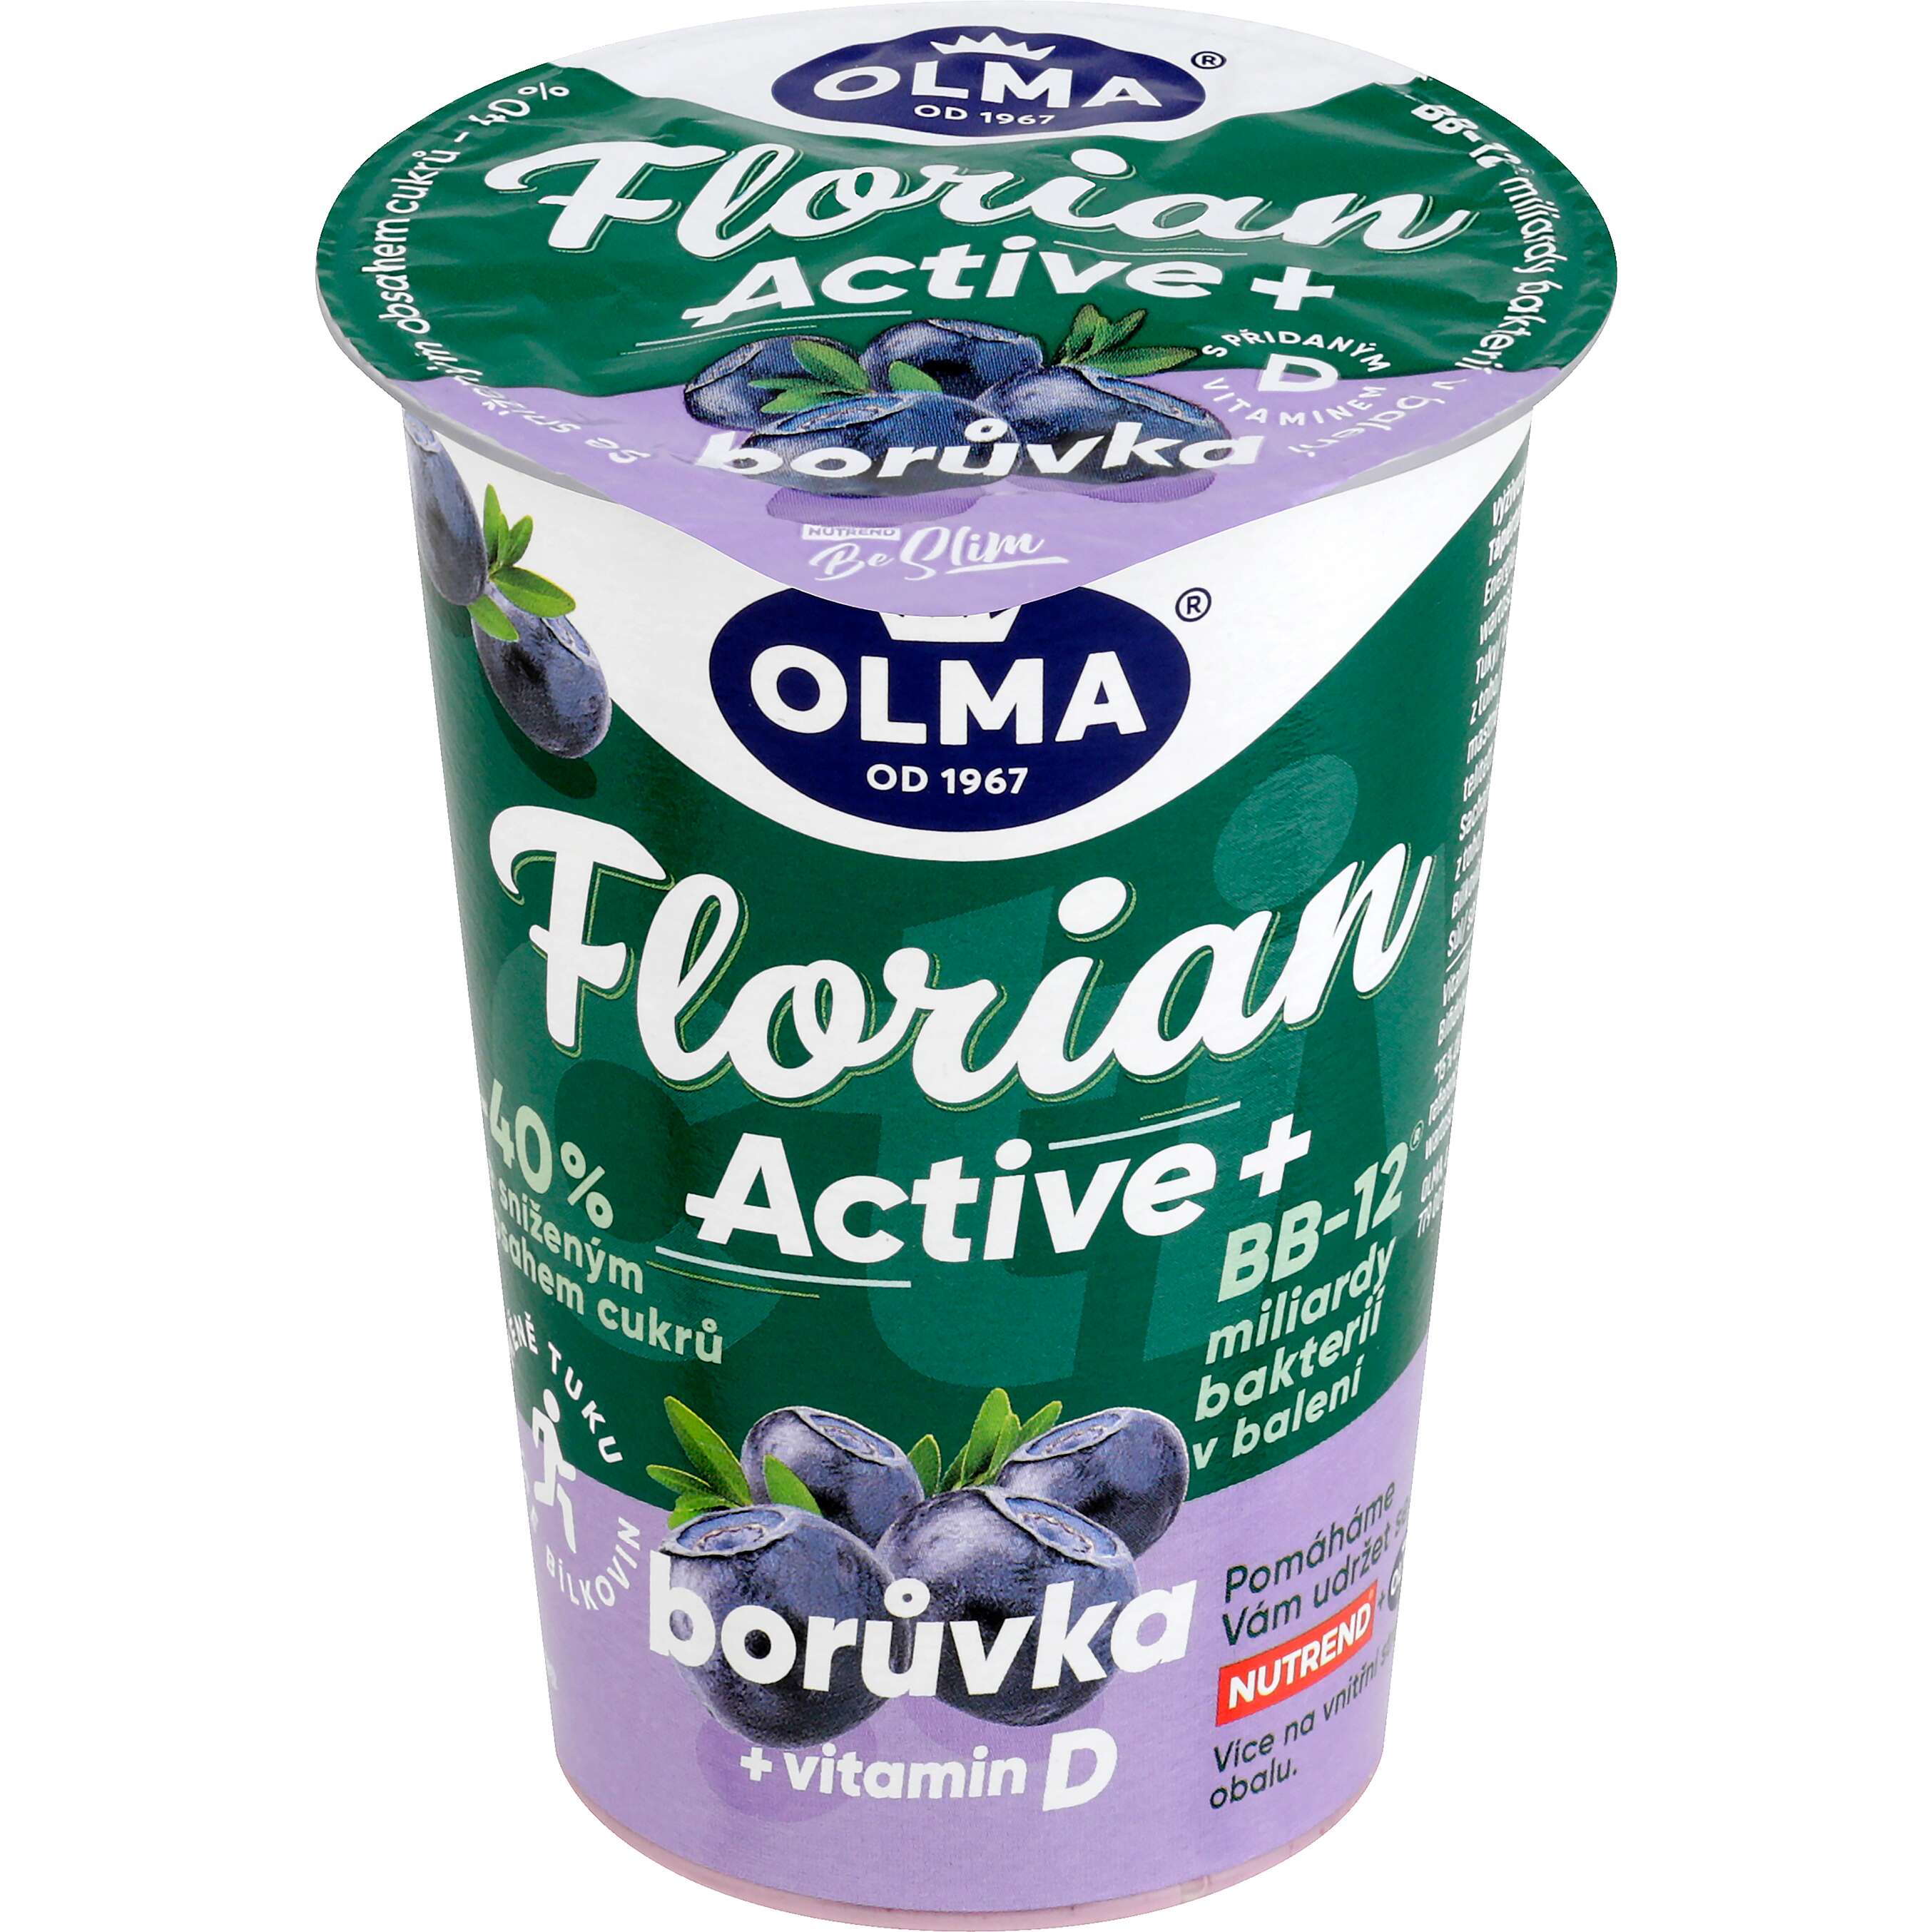 Zobrazit nabídku Florian Active Jogurt